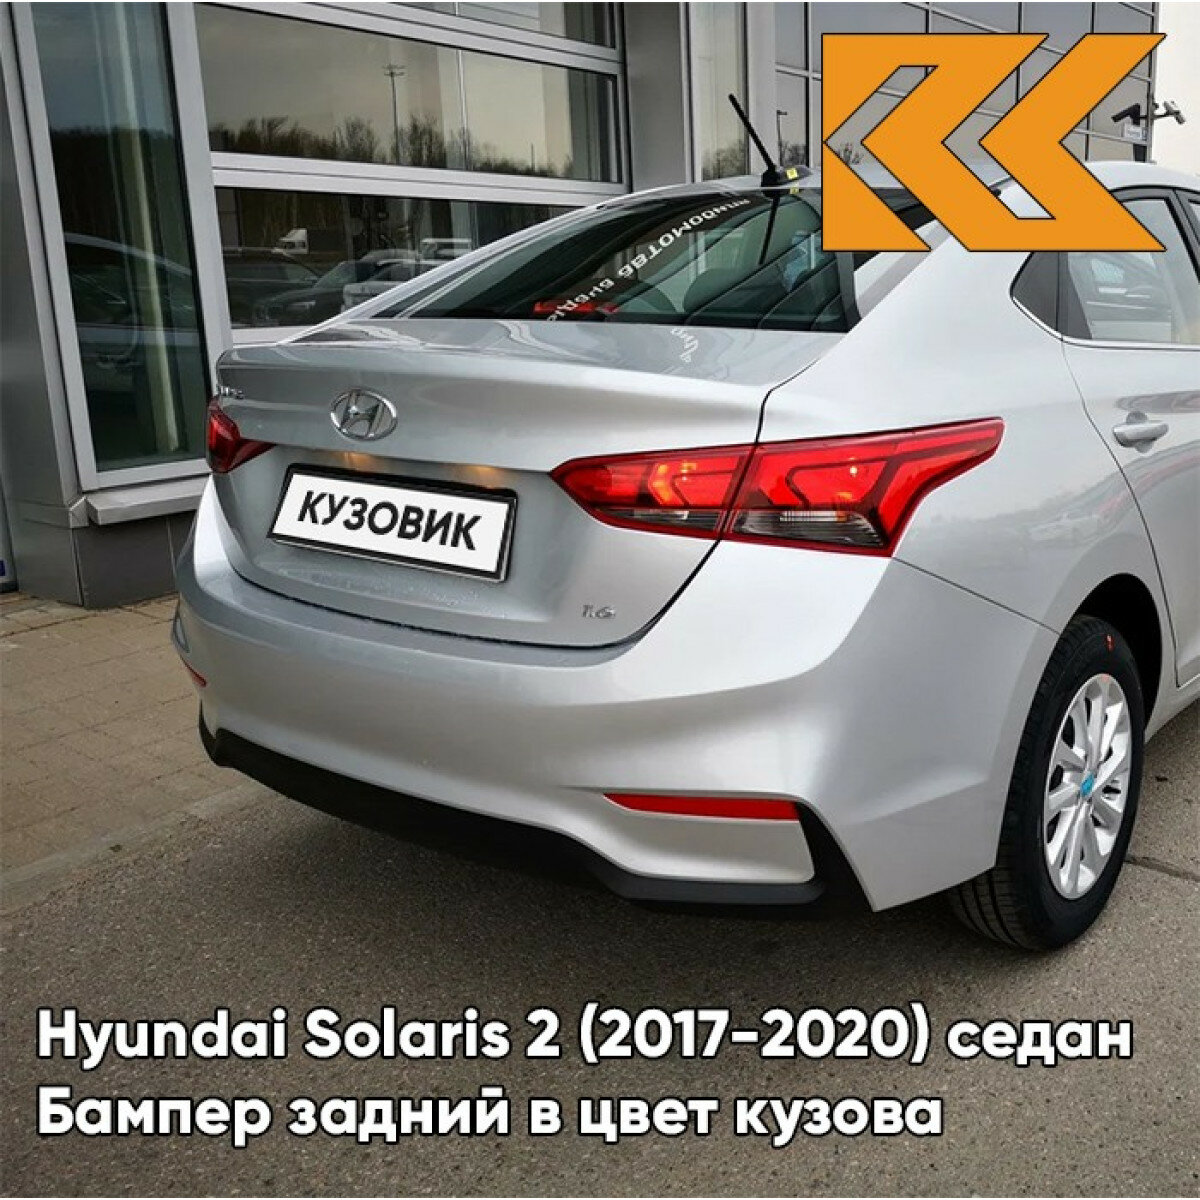 Бампер задний в цвет Hyundai Solaris 2 (2017-2020) седан правM - SLEEK SILVER - Серебристый